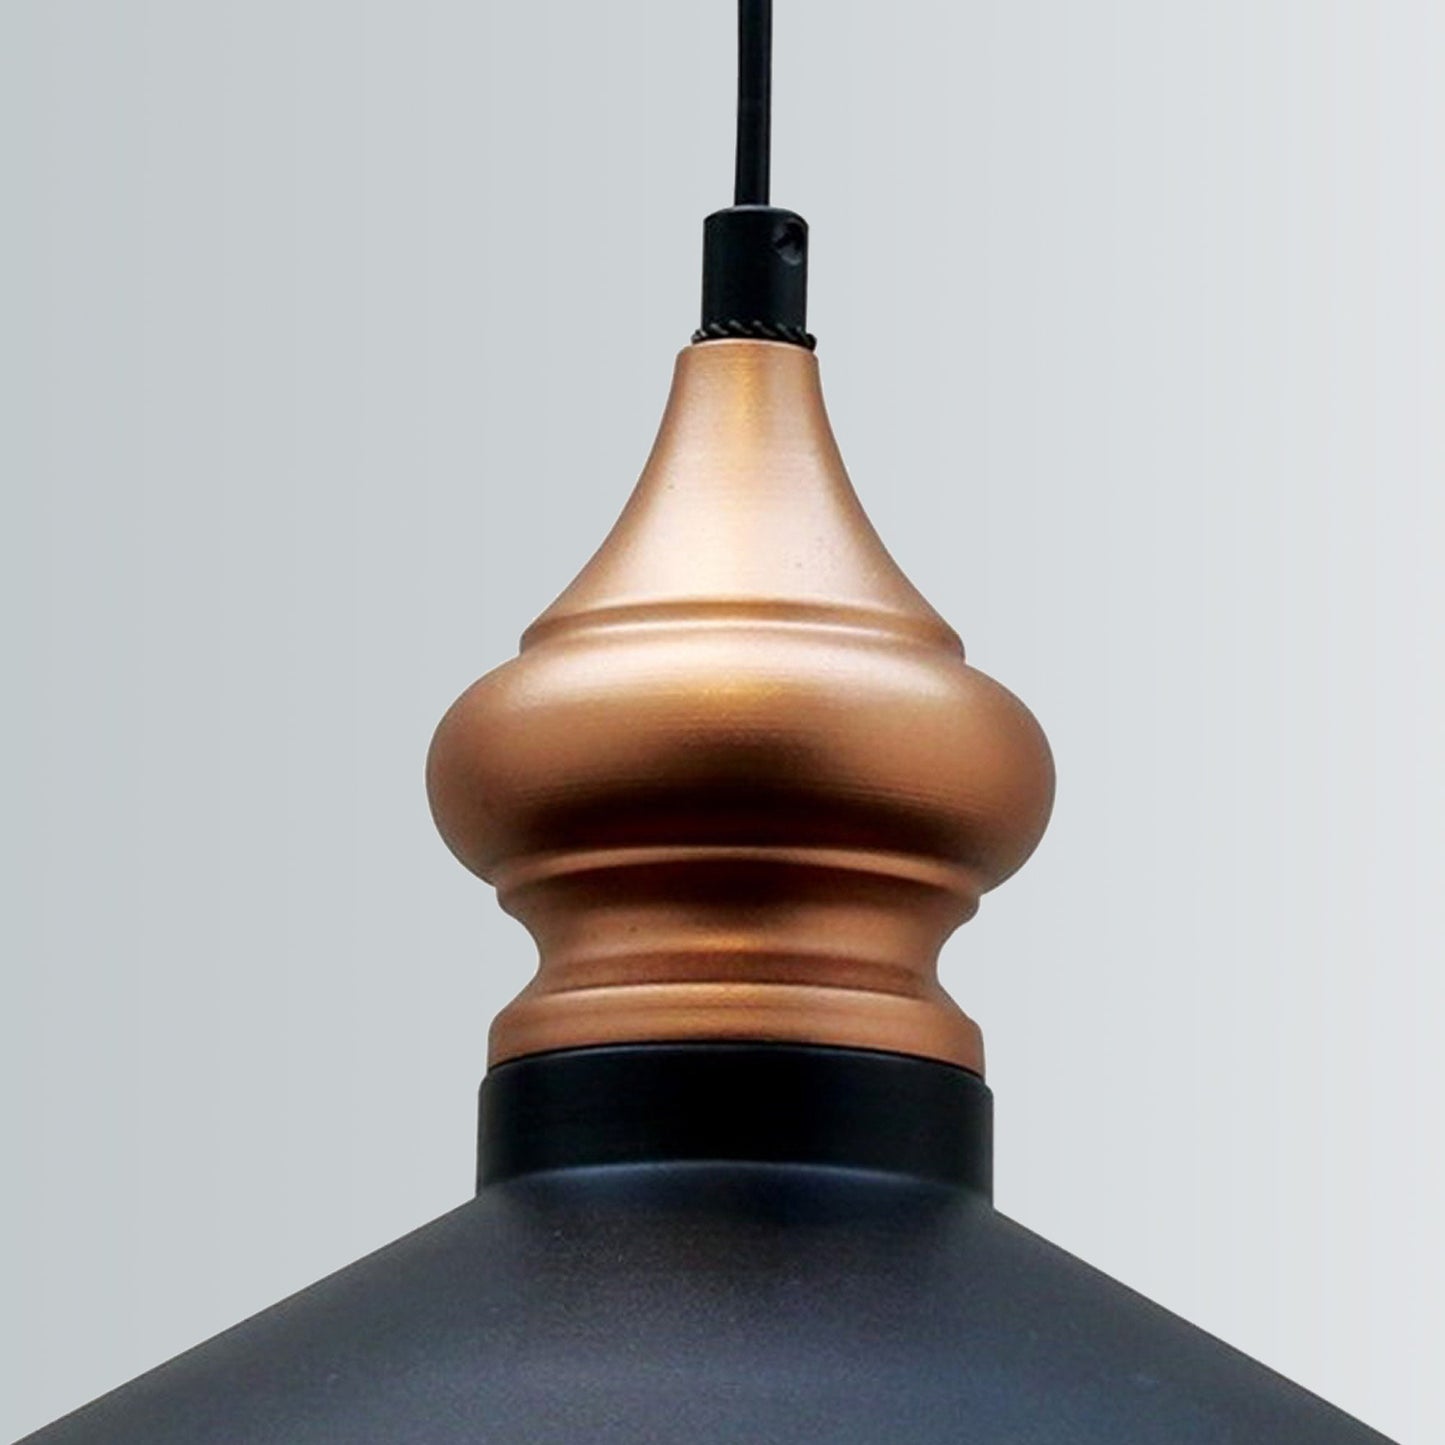 LOFT LAMP, Industrial Lighting, Pendant Light, Vintage Light, Home Lighting, Retro, Ceiling Pendant Light, Black, Gold Light, Moracco Lamp